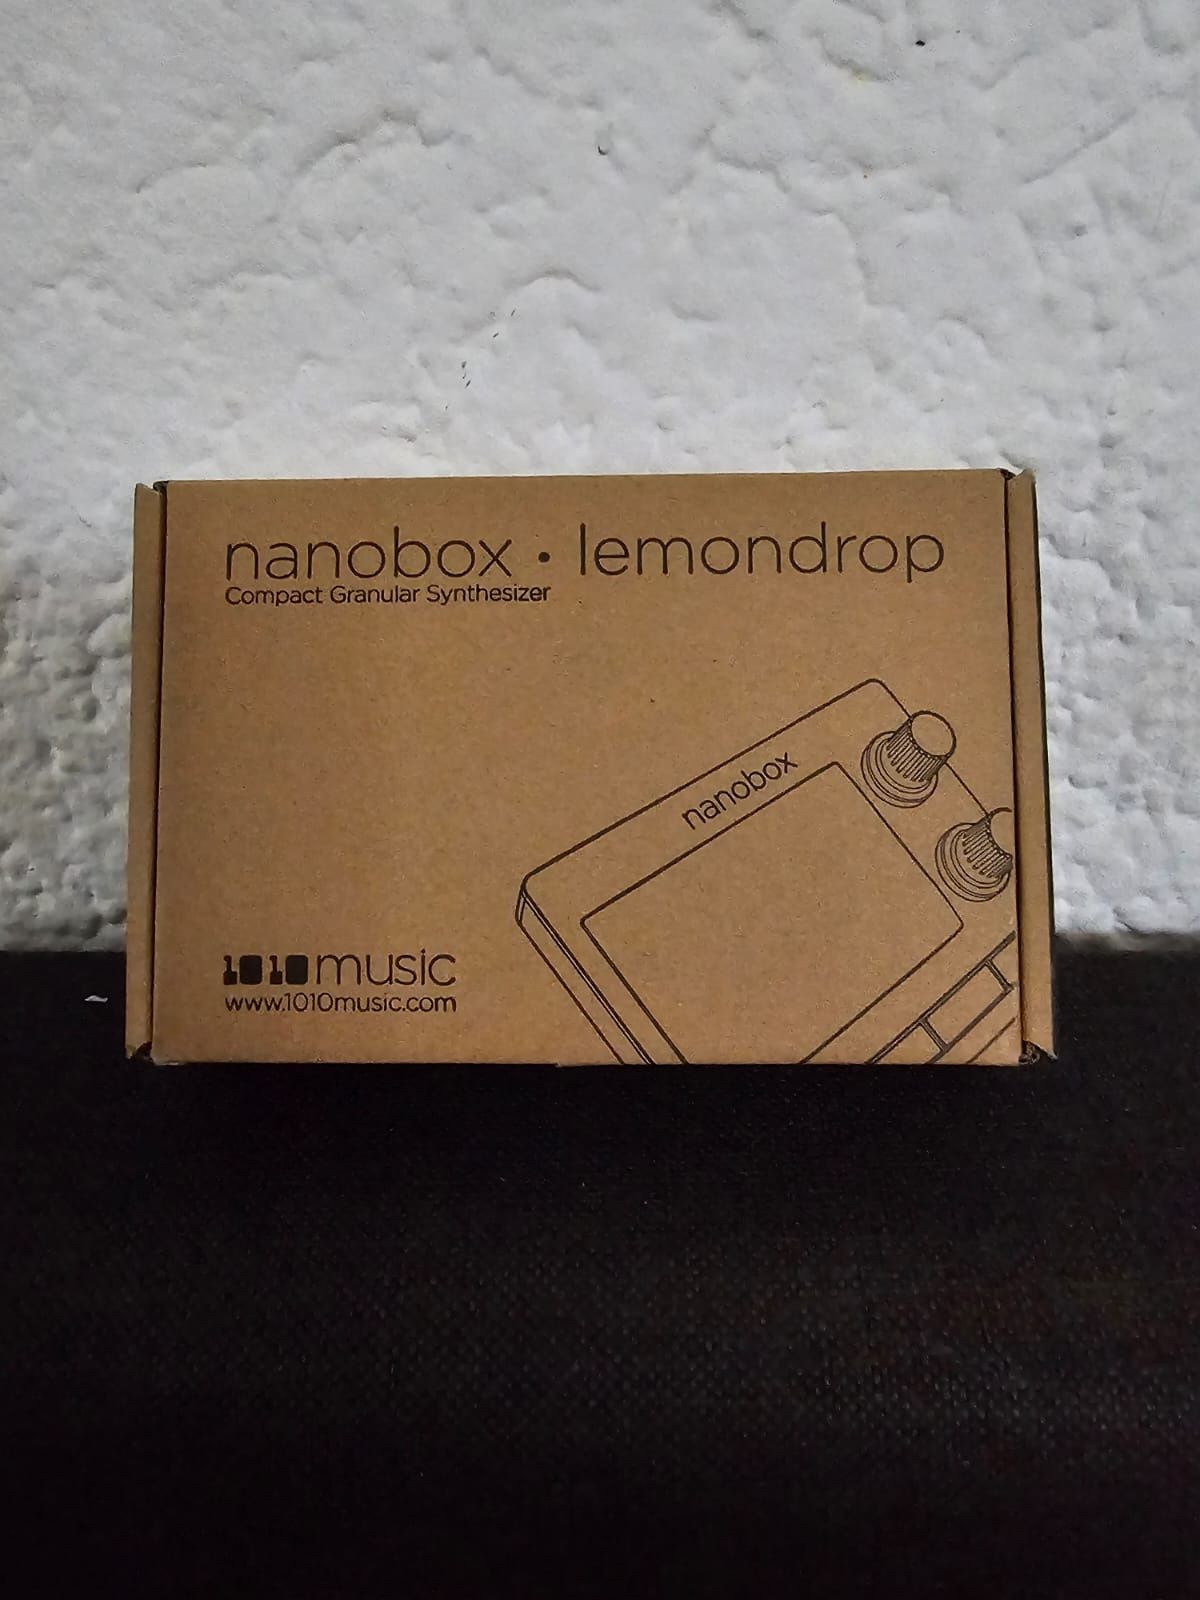 Nanobox Lemondrop